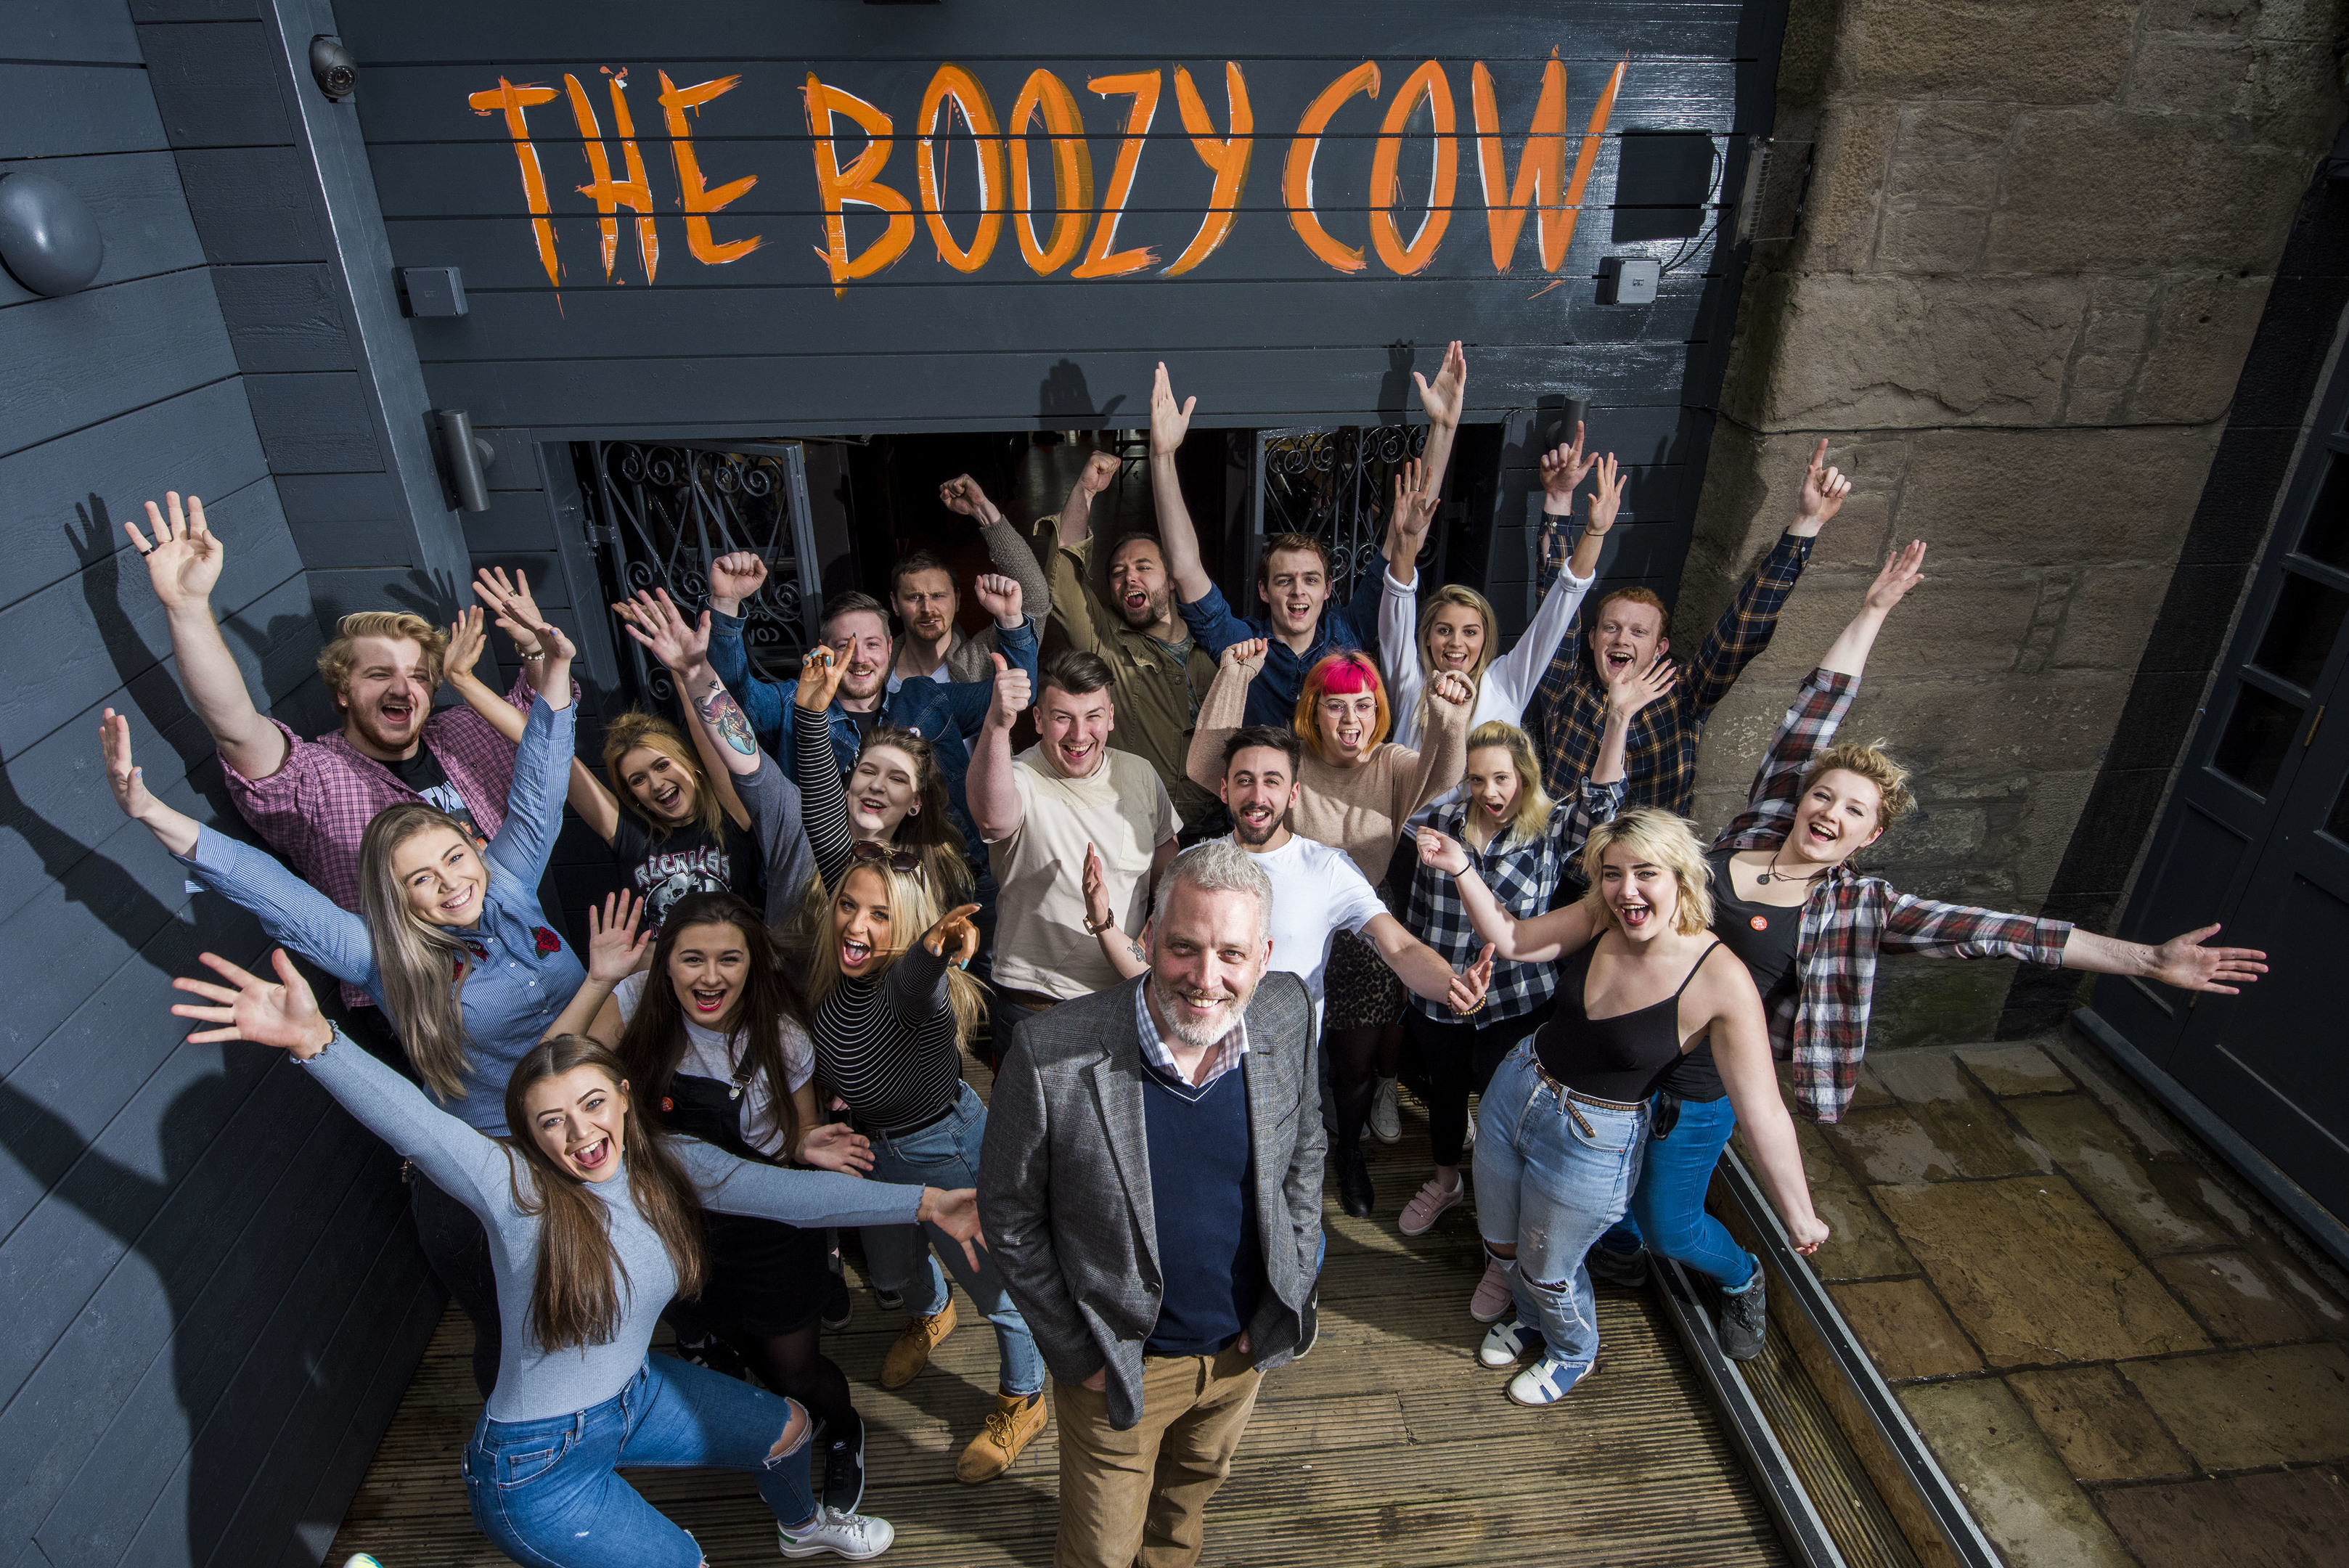 The Boozy Cow staff.